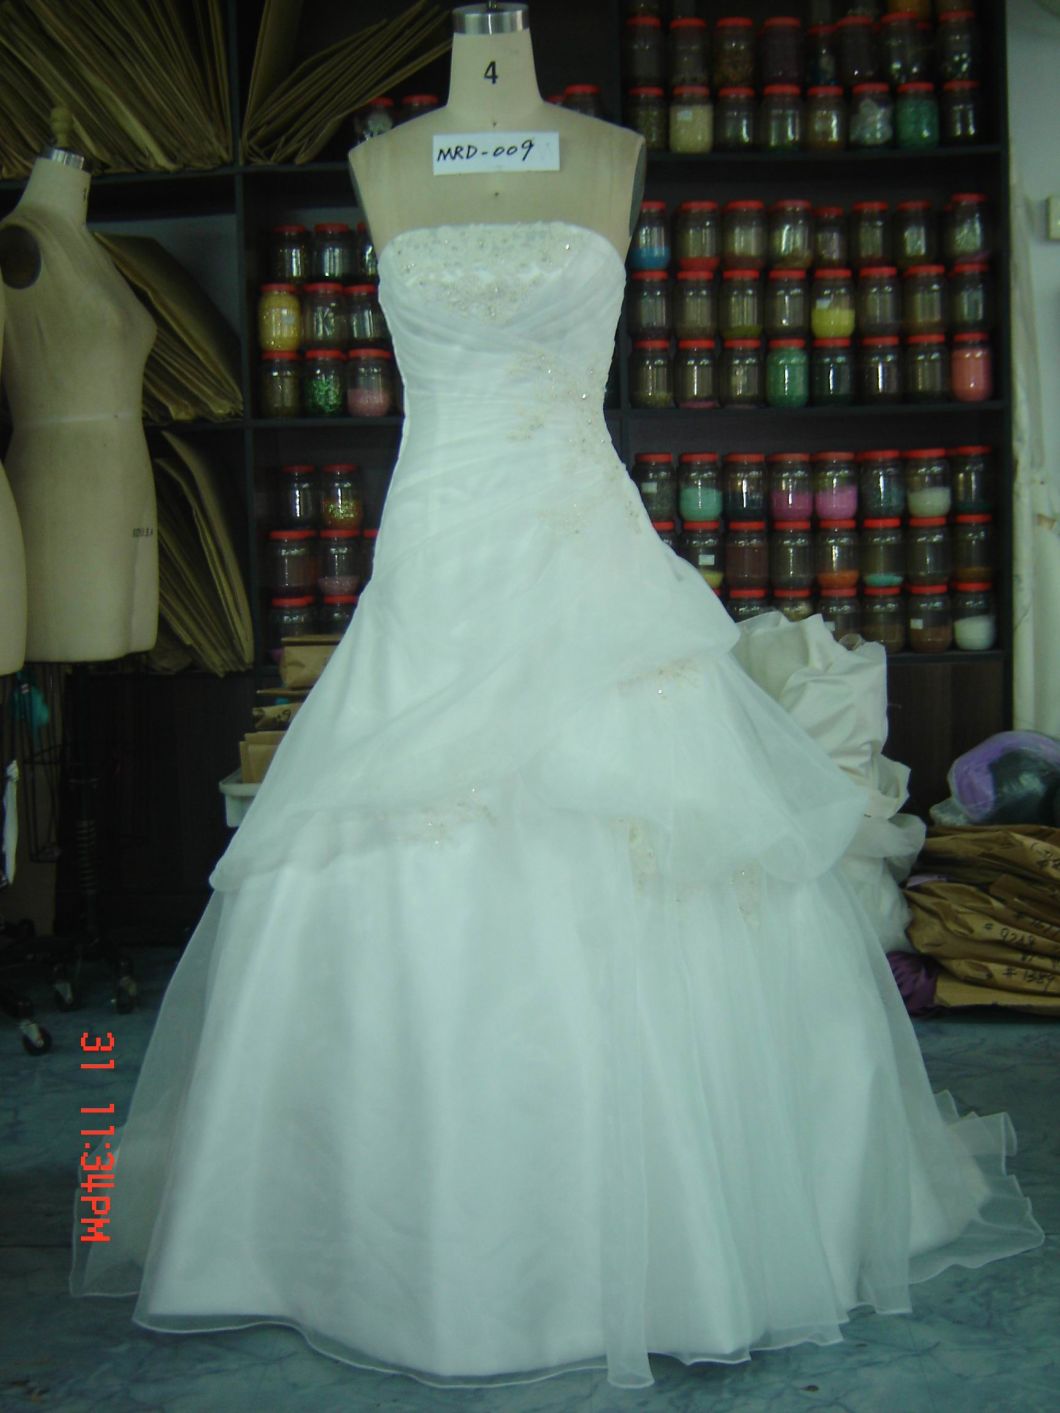 2016 A-Line Bridal Wedding Dresses Mrd009